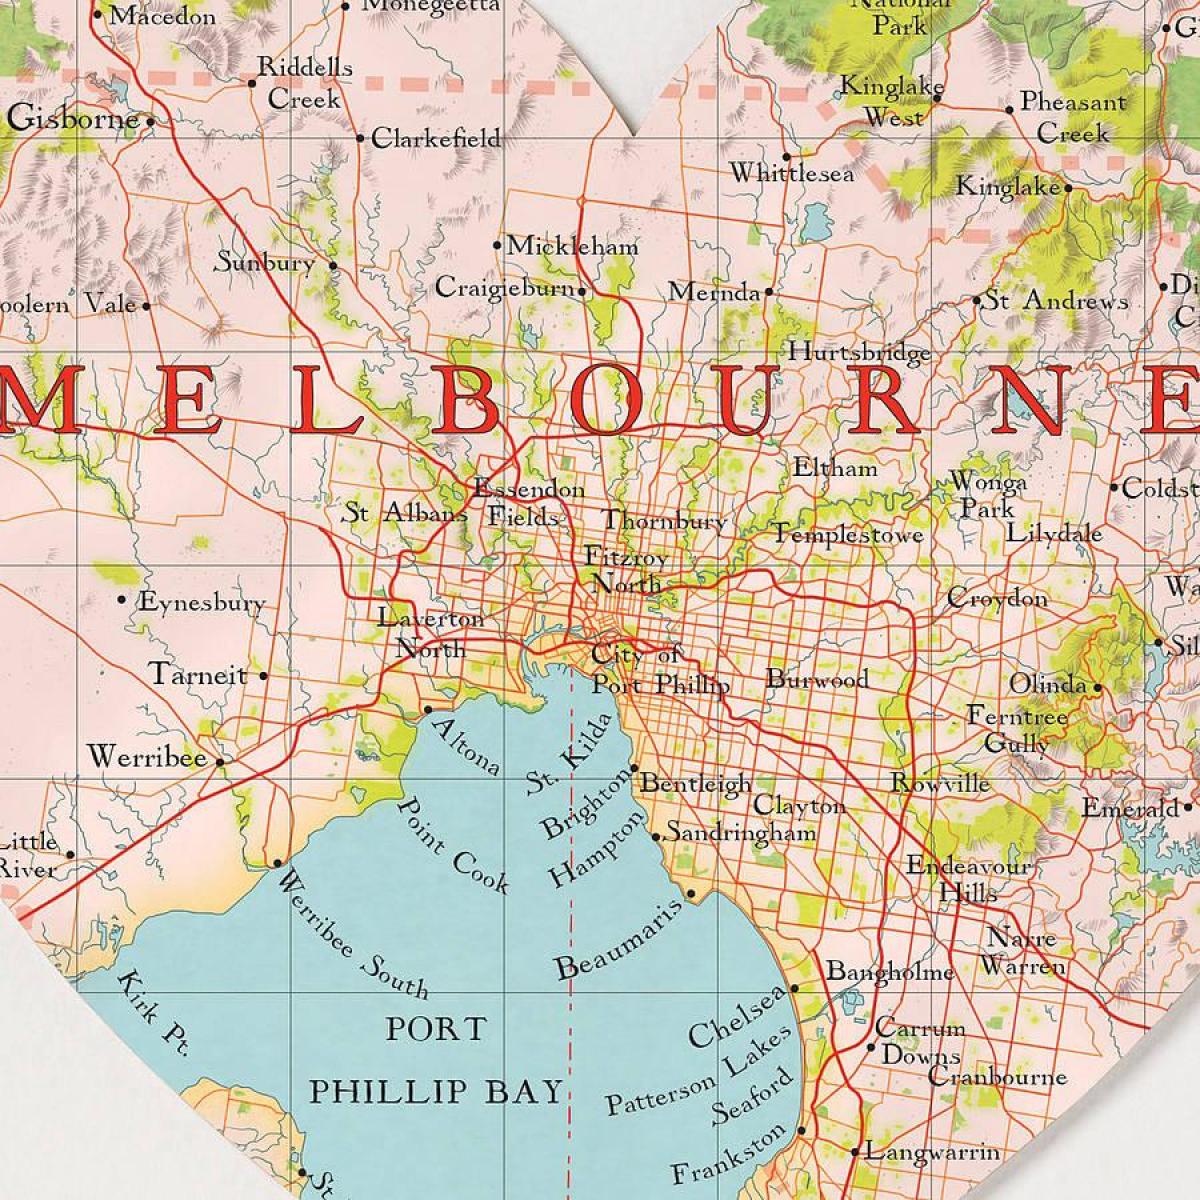 Melbourne carte du monde